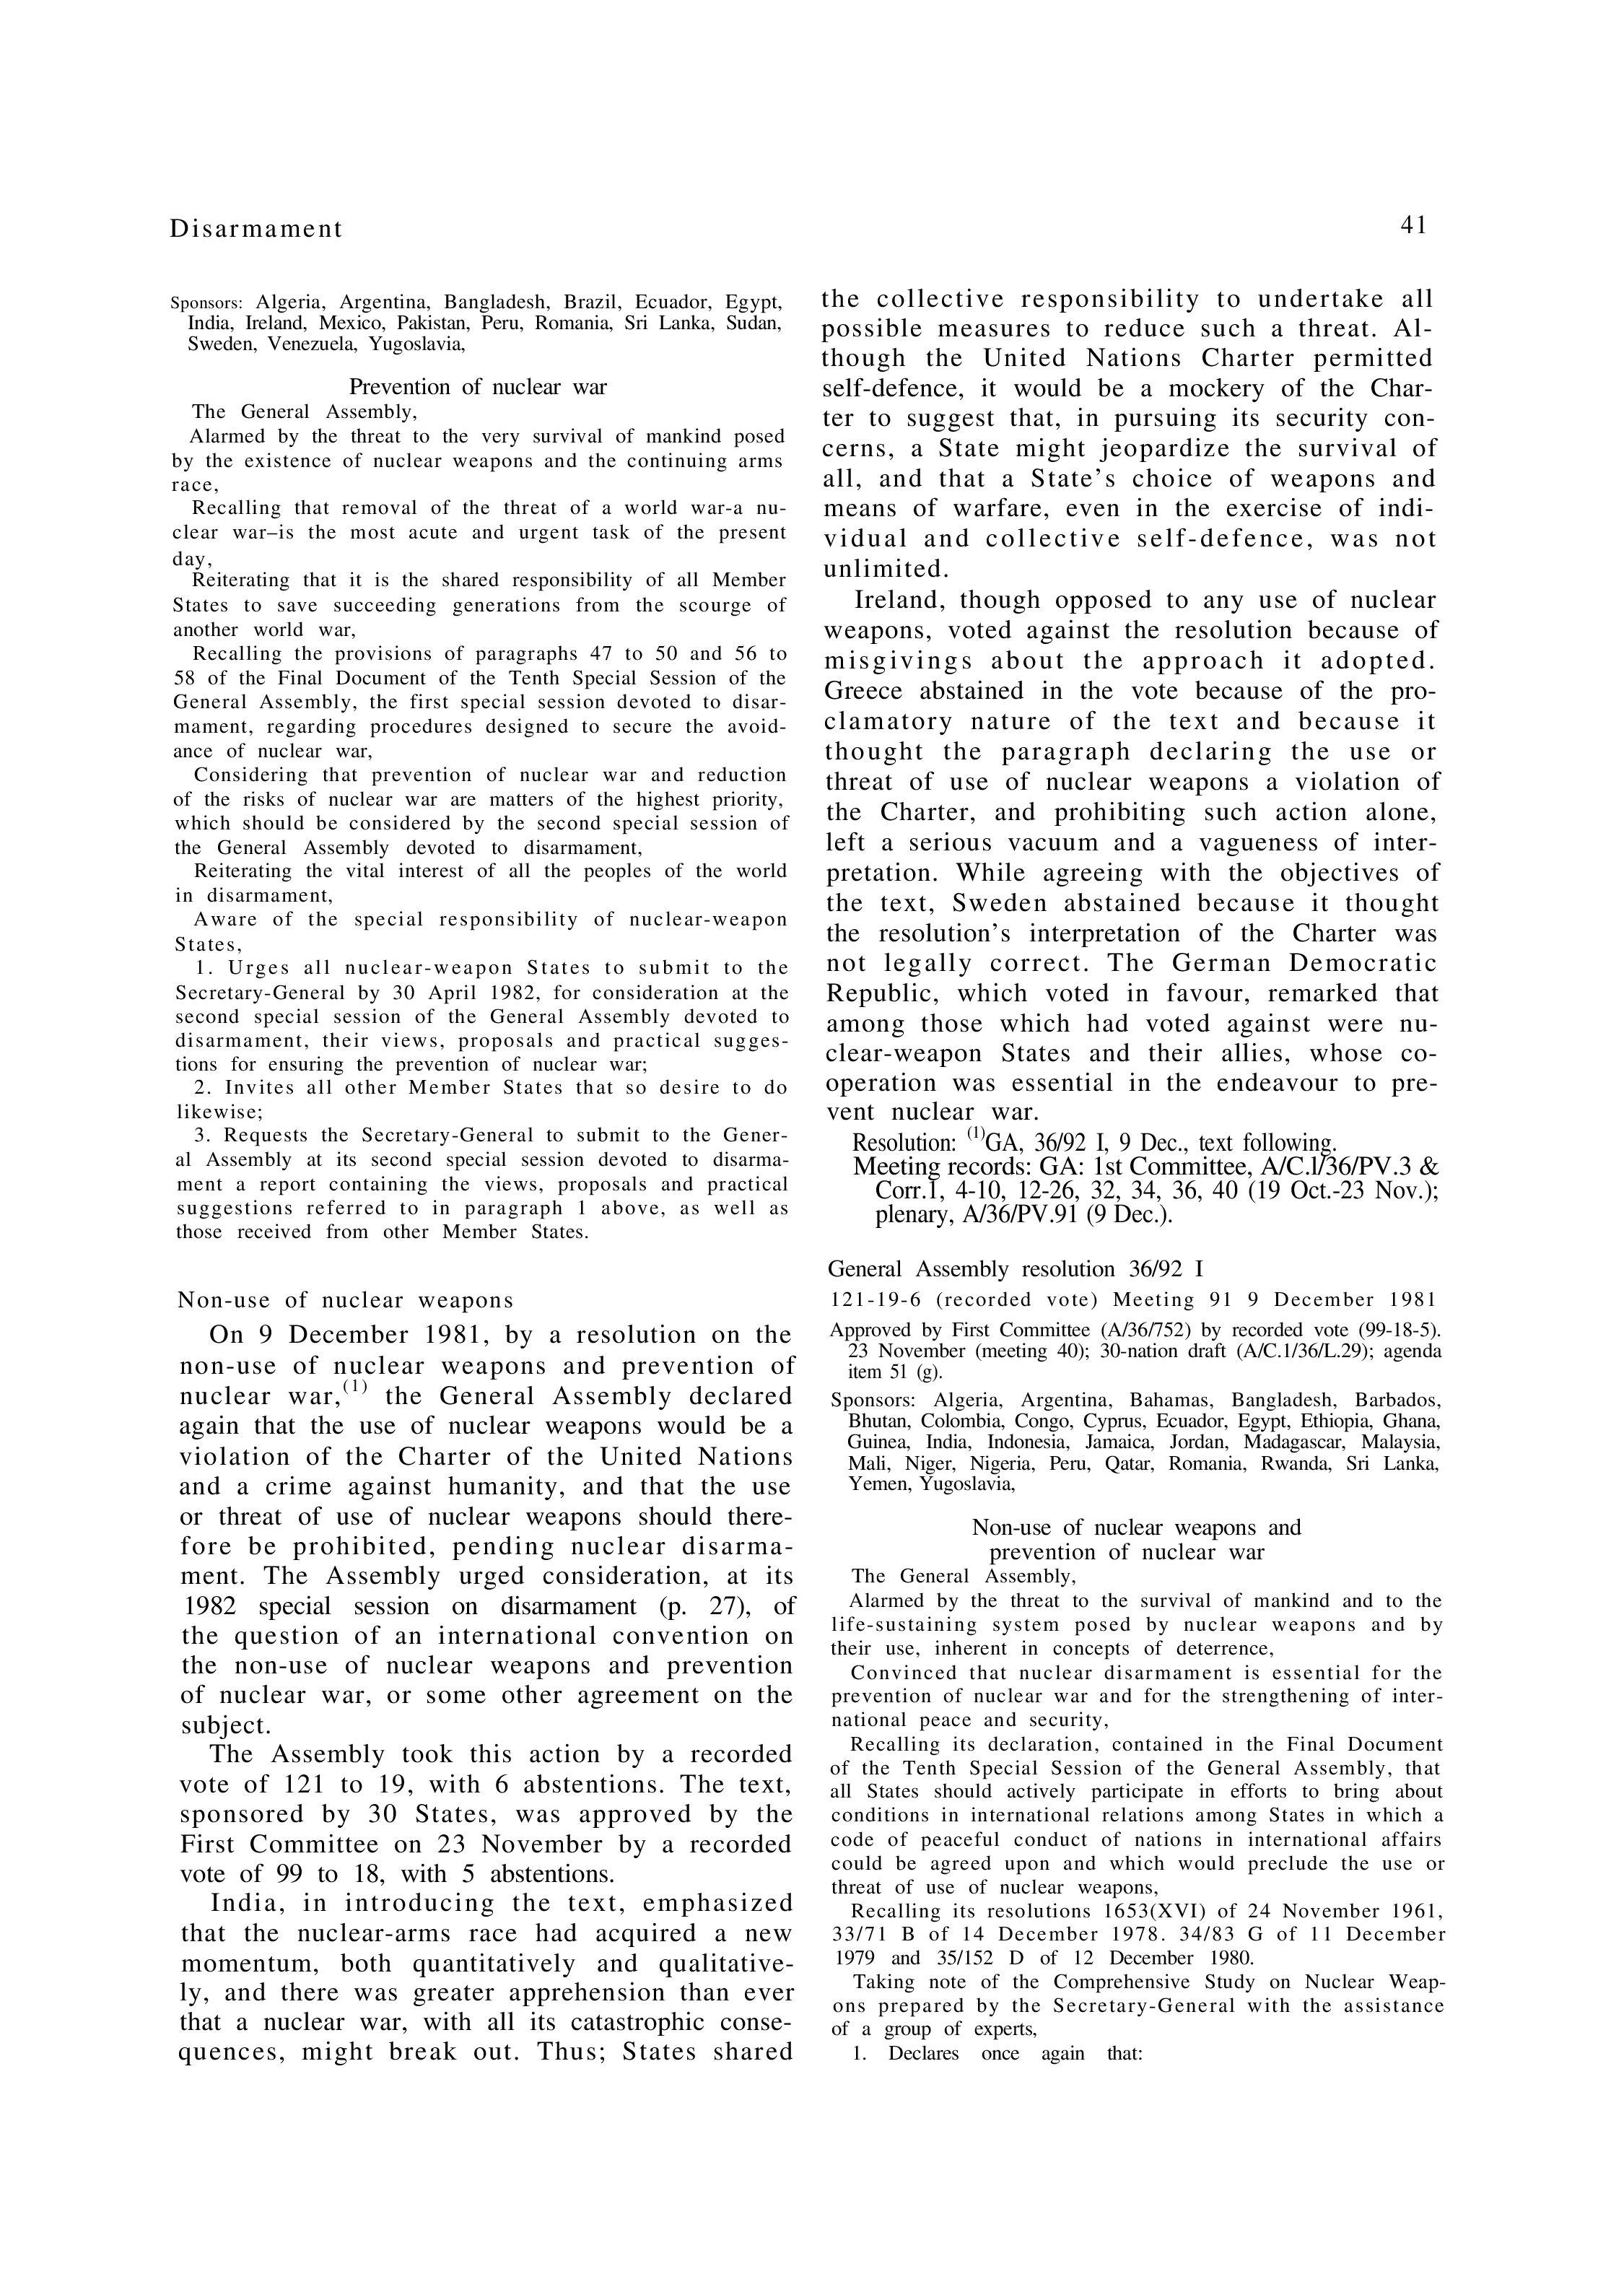 YUN Volume_Page 1981_53